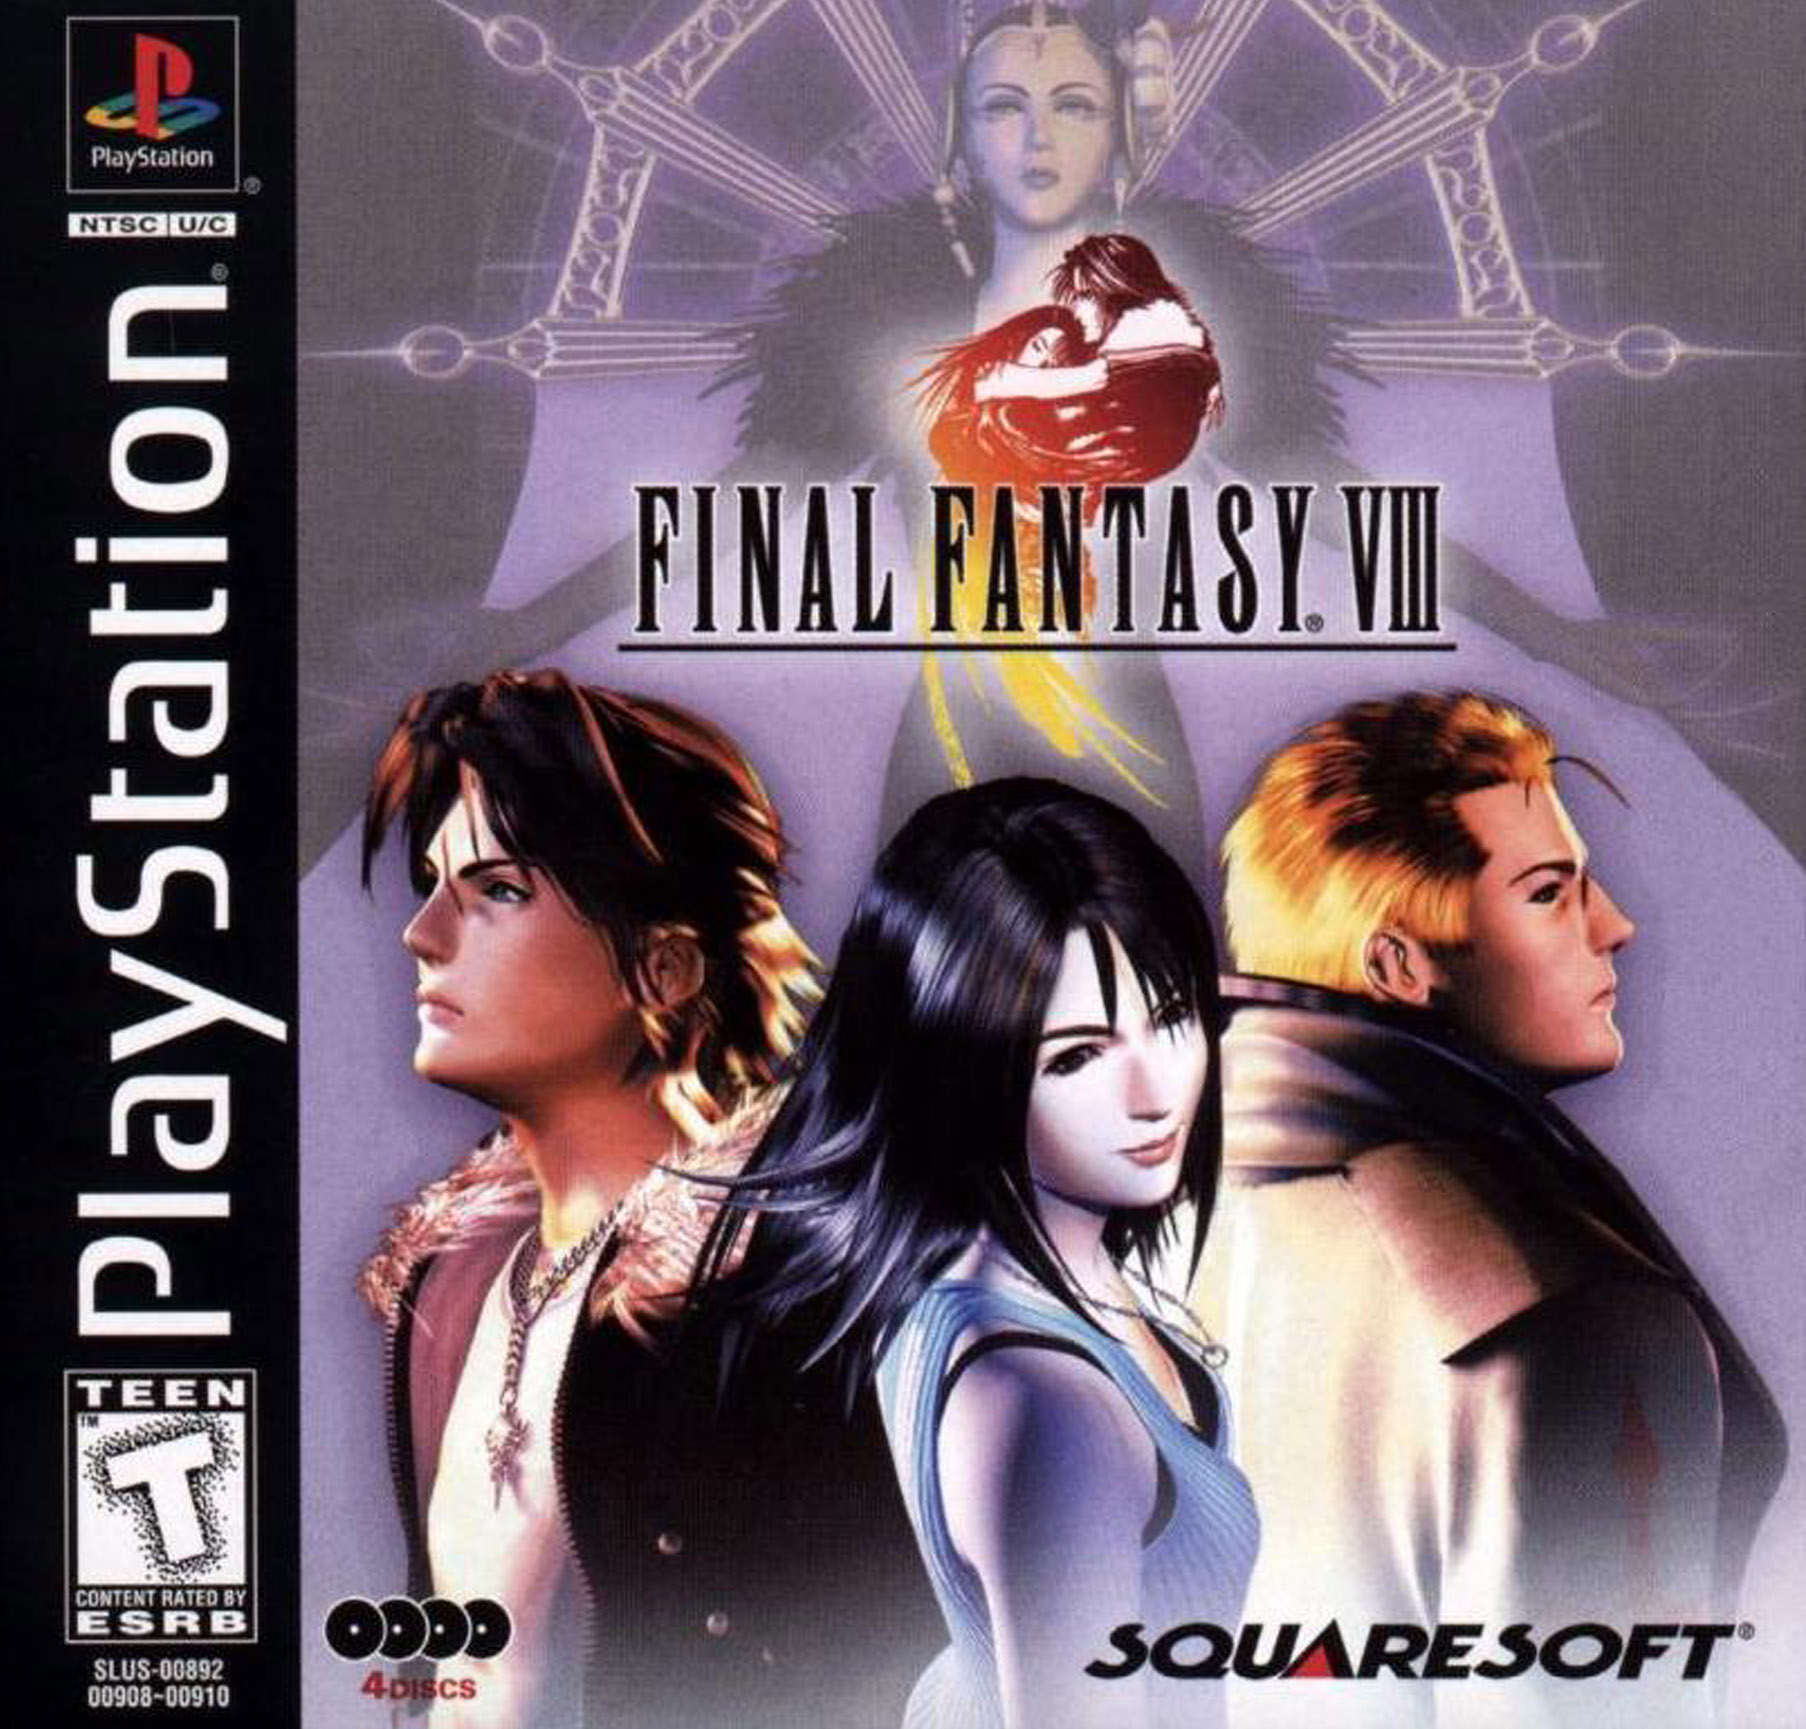 Final Fantasy VIII for psx screenshot